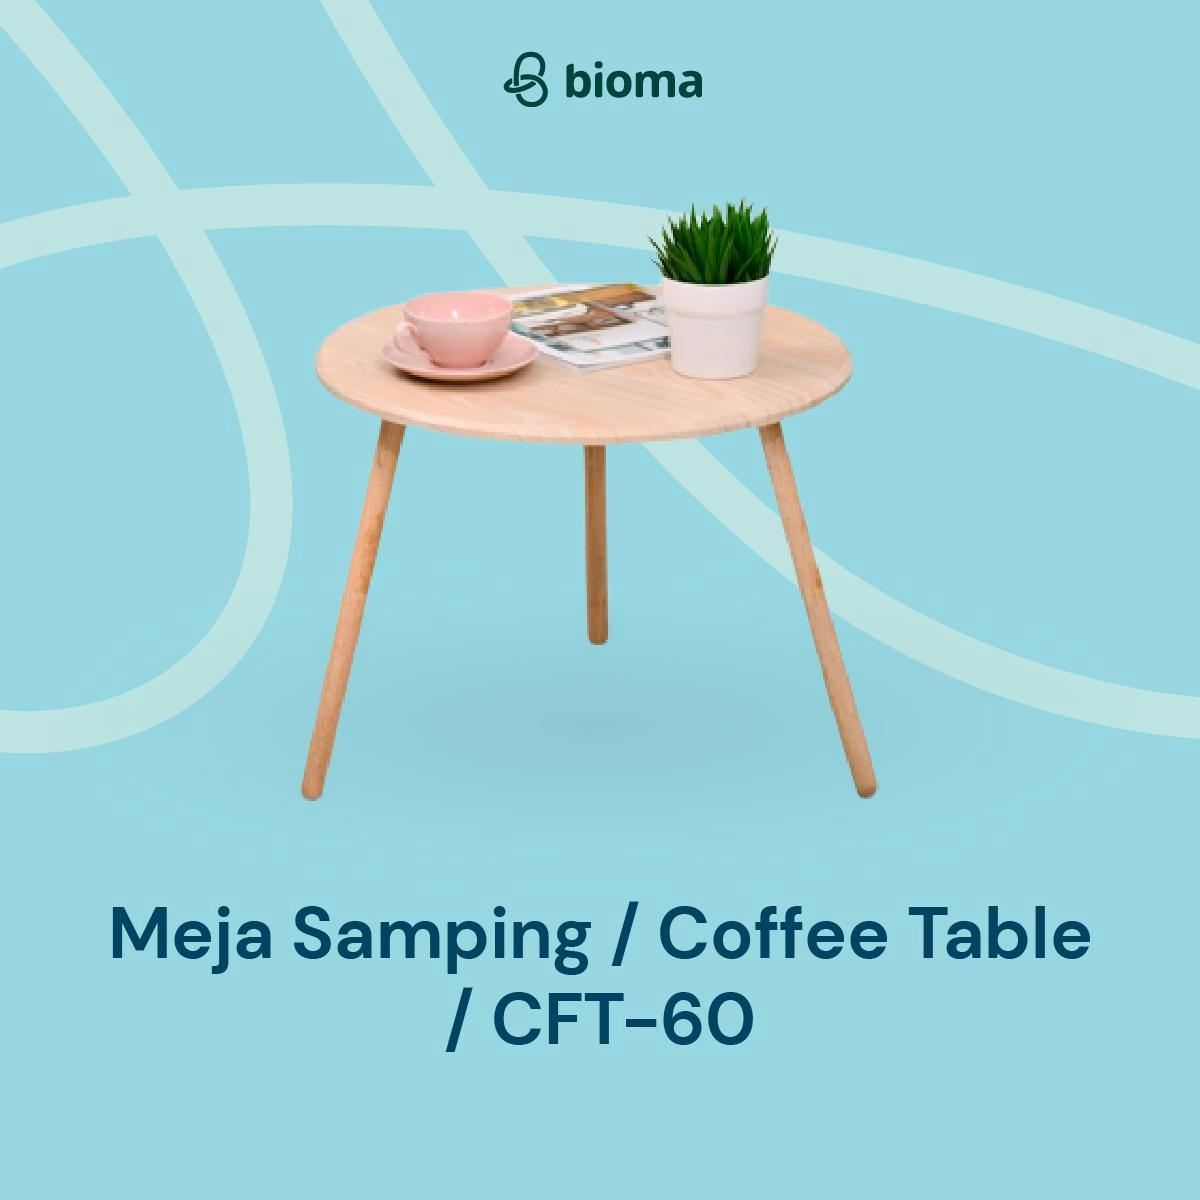 Meja Samping / Coffee Table / CFT-60